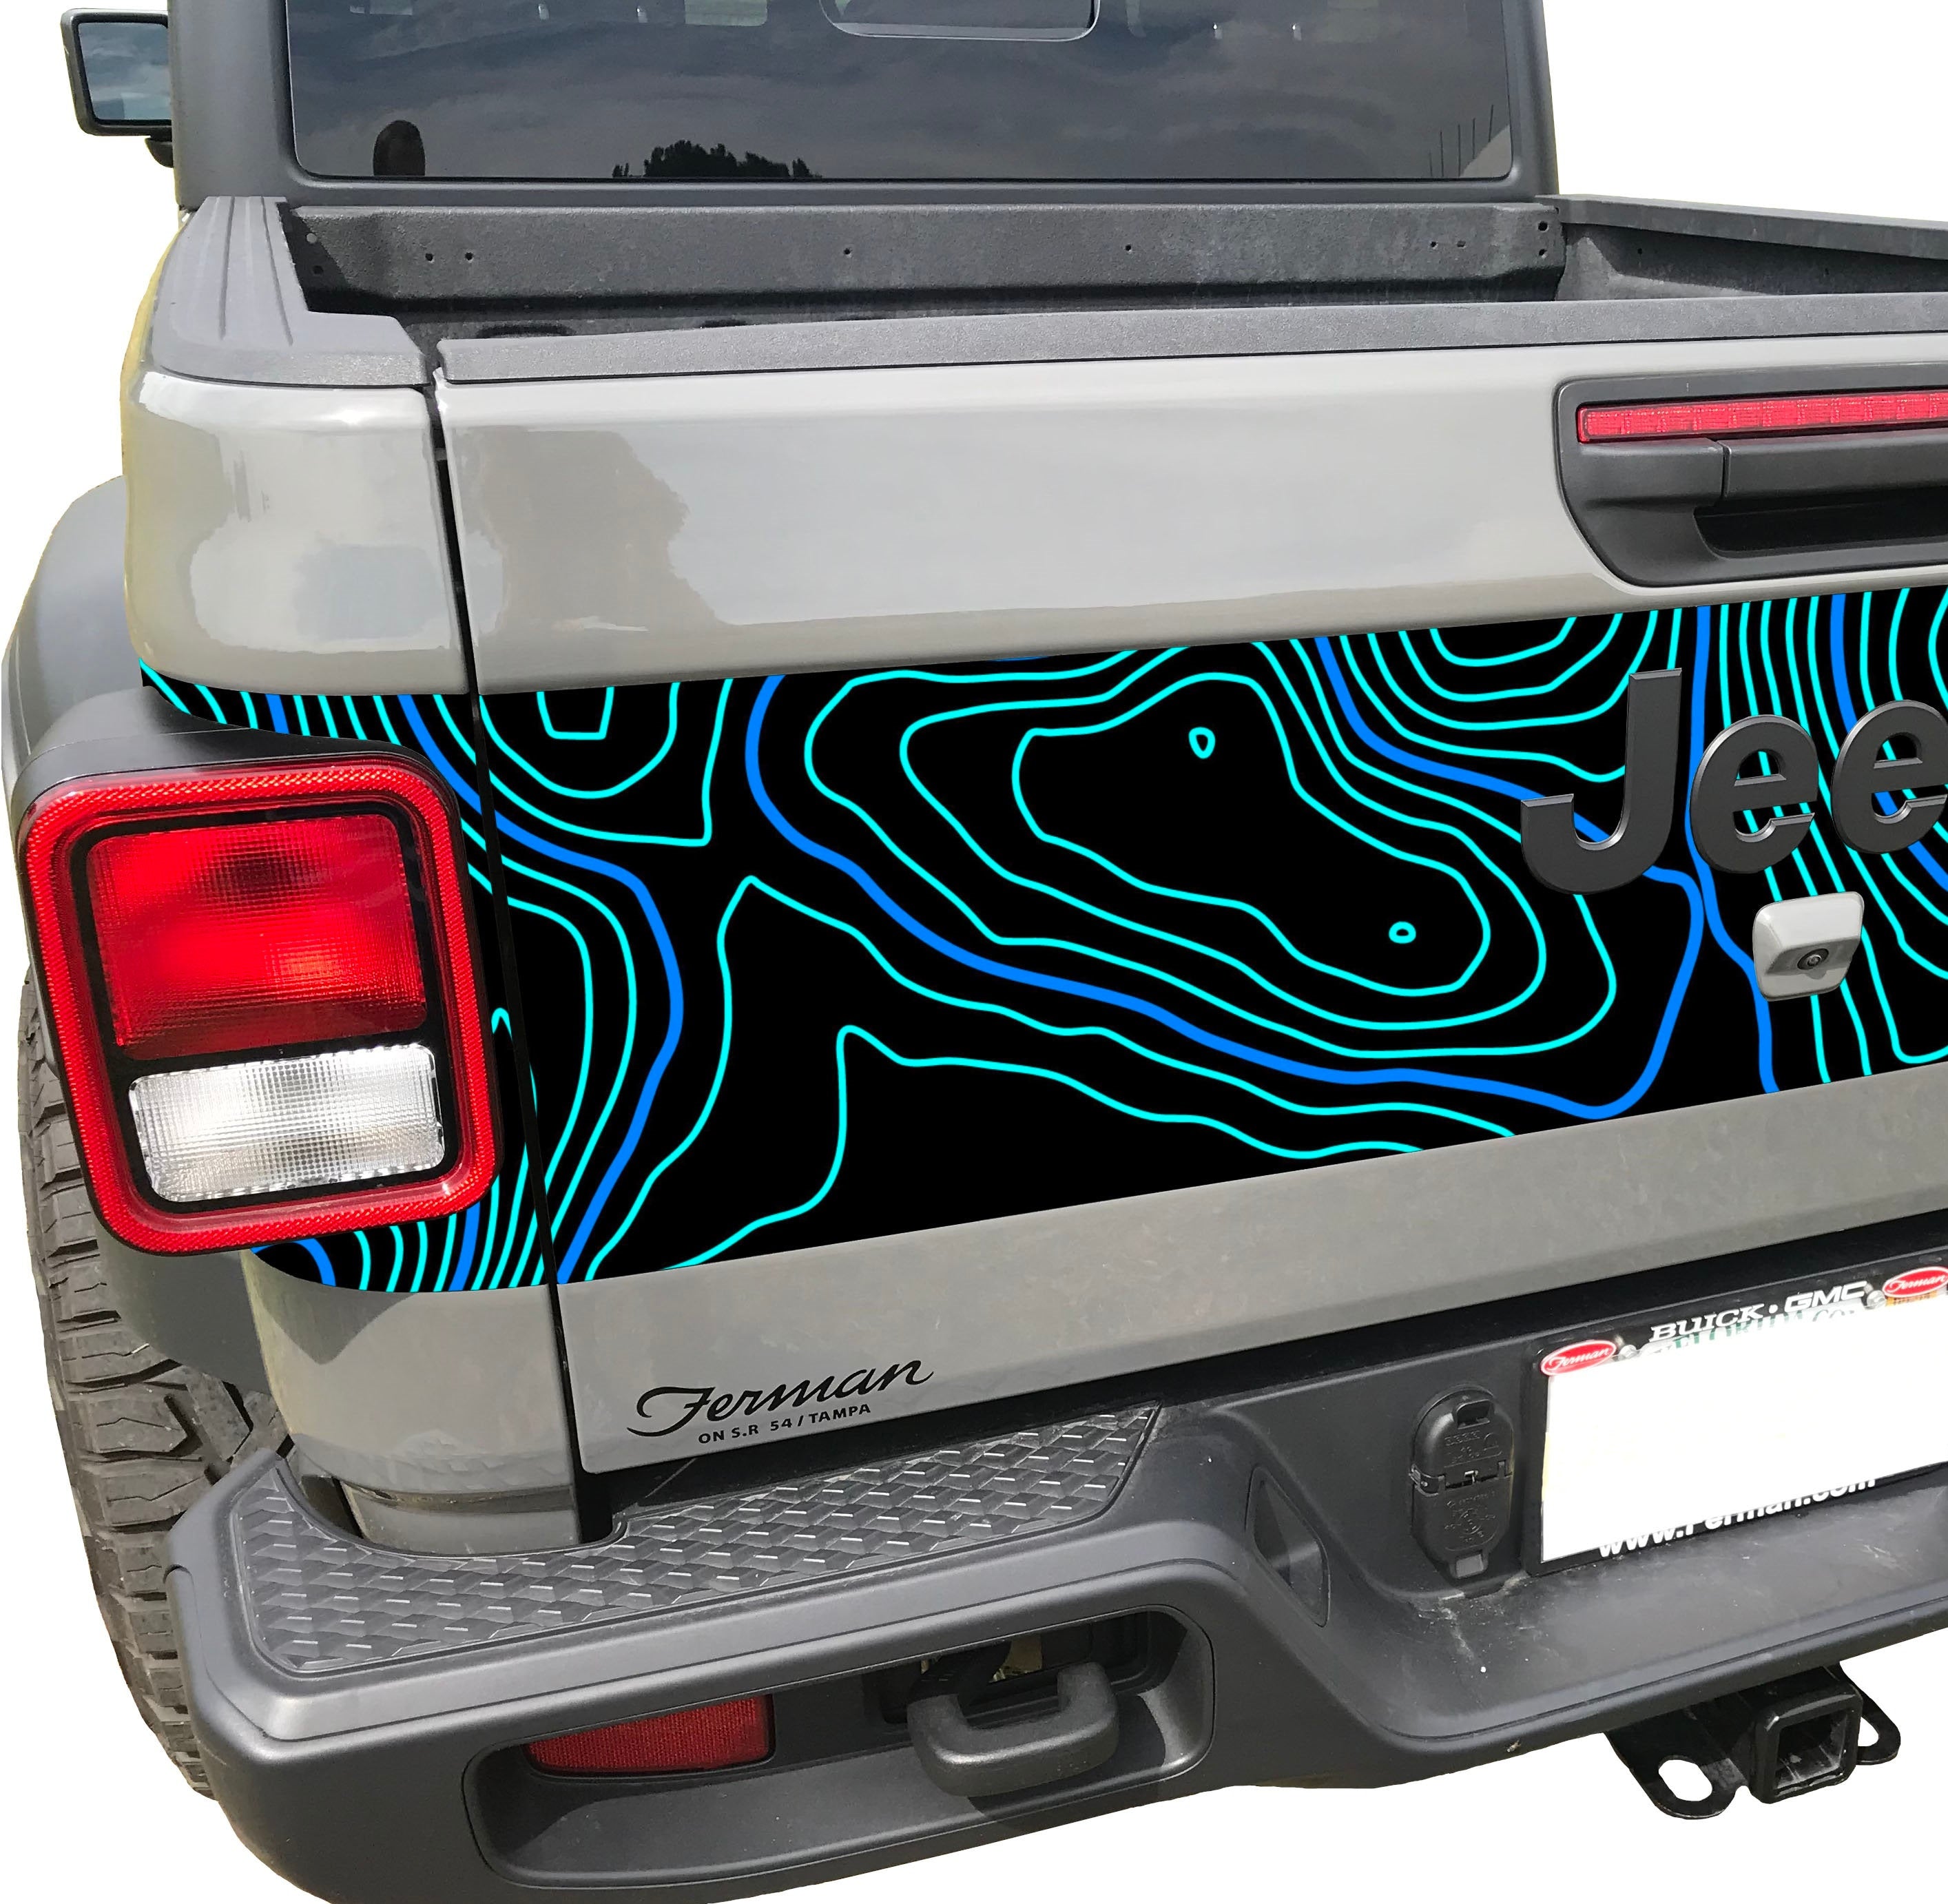 gmc truck rear window graphics